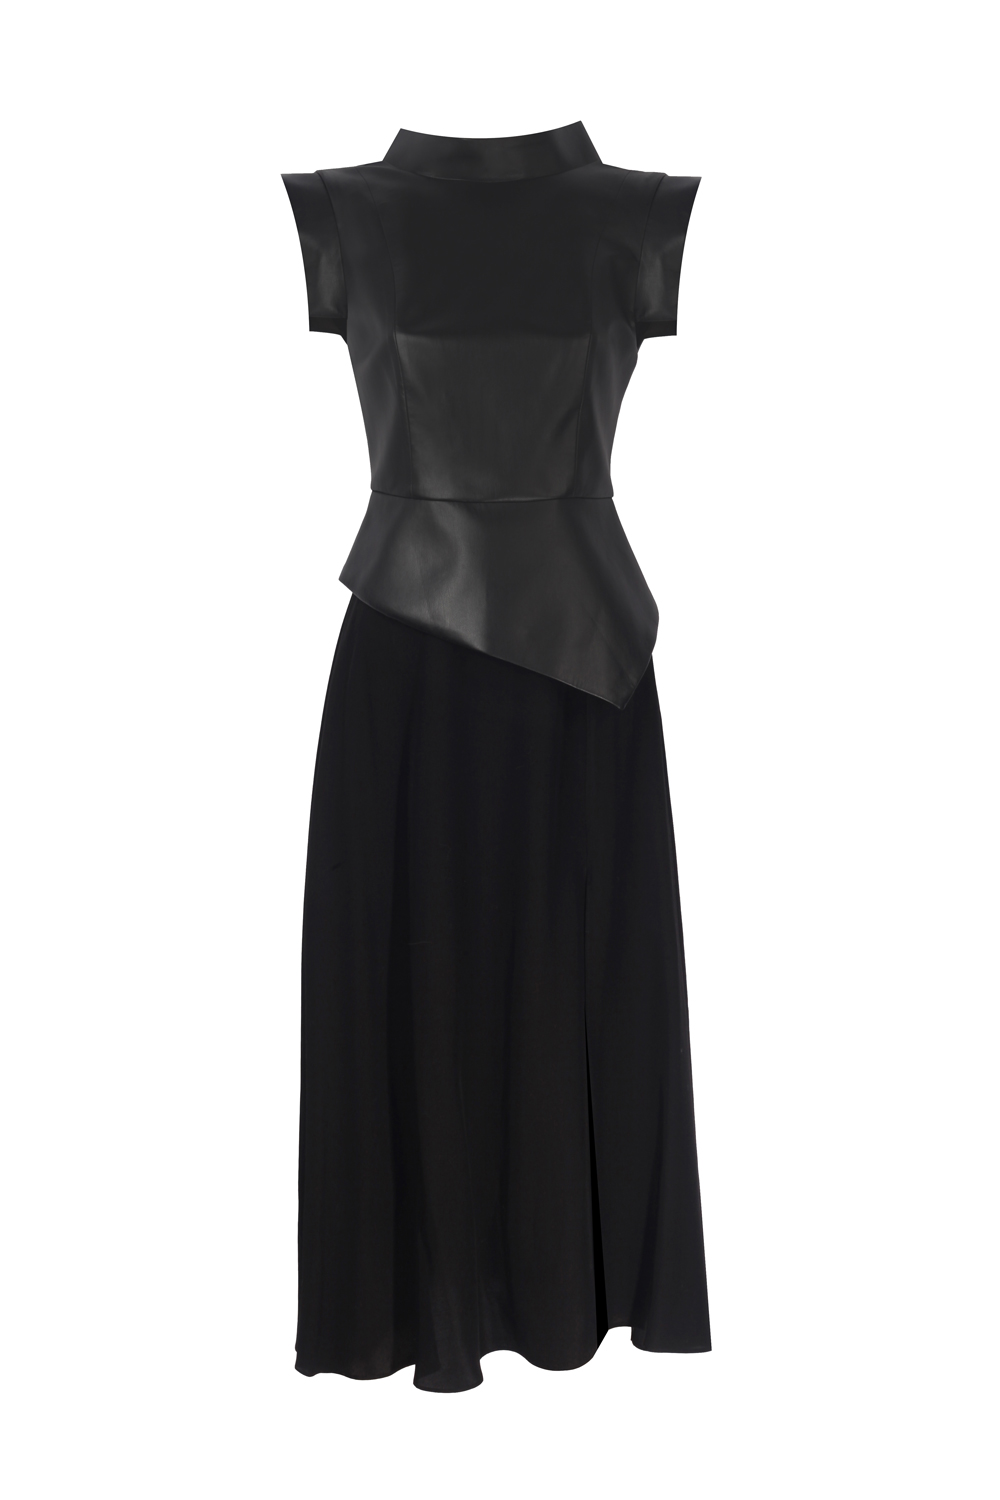 Concrete Black Midi Dress